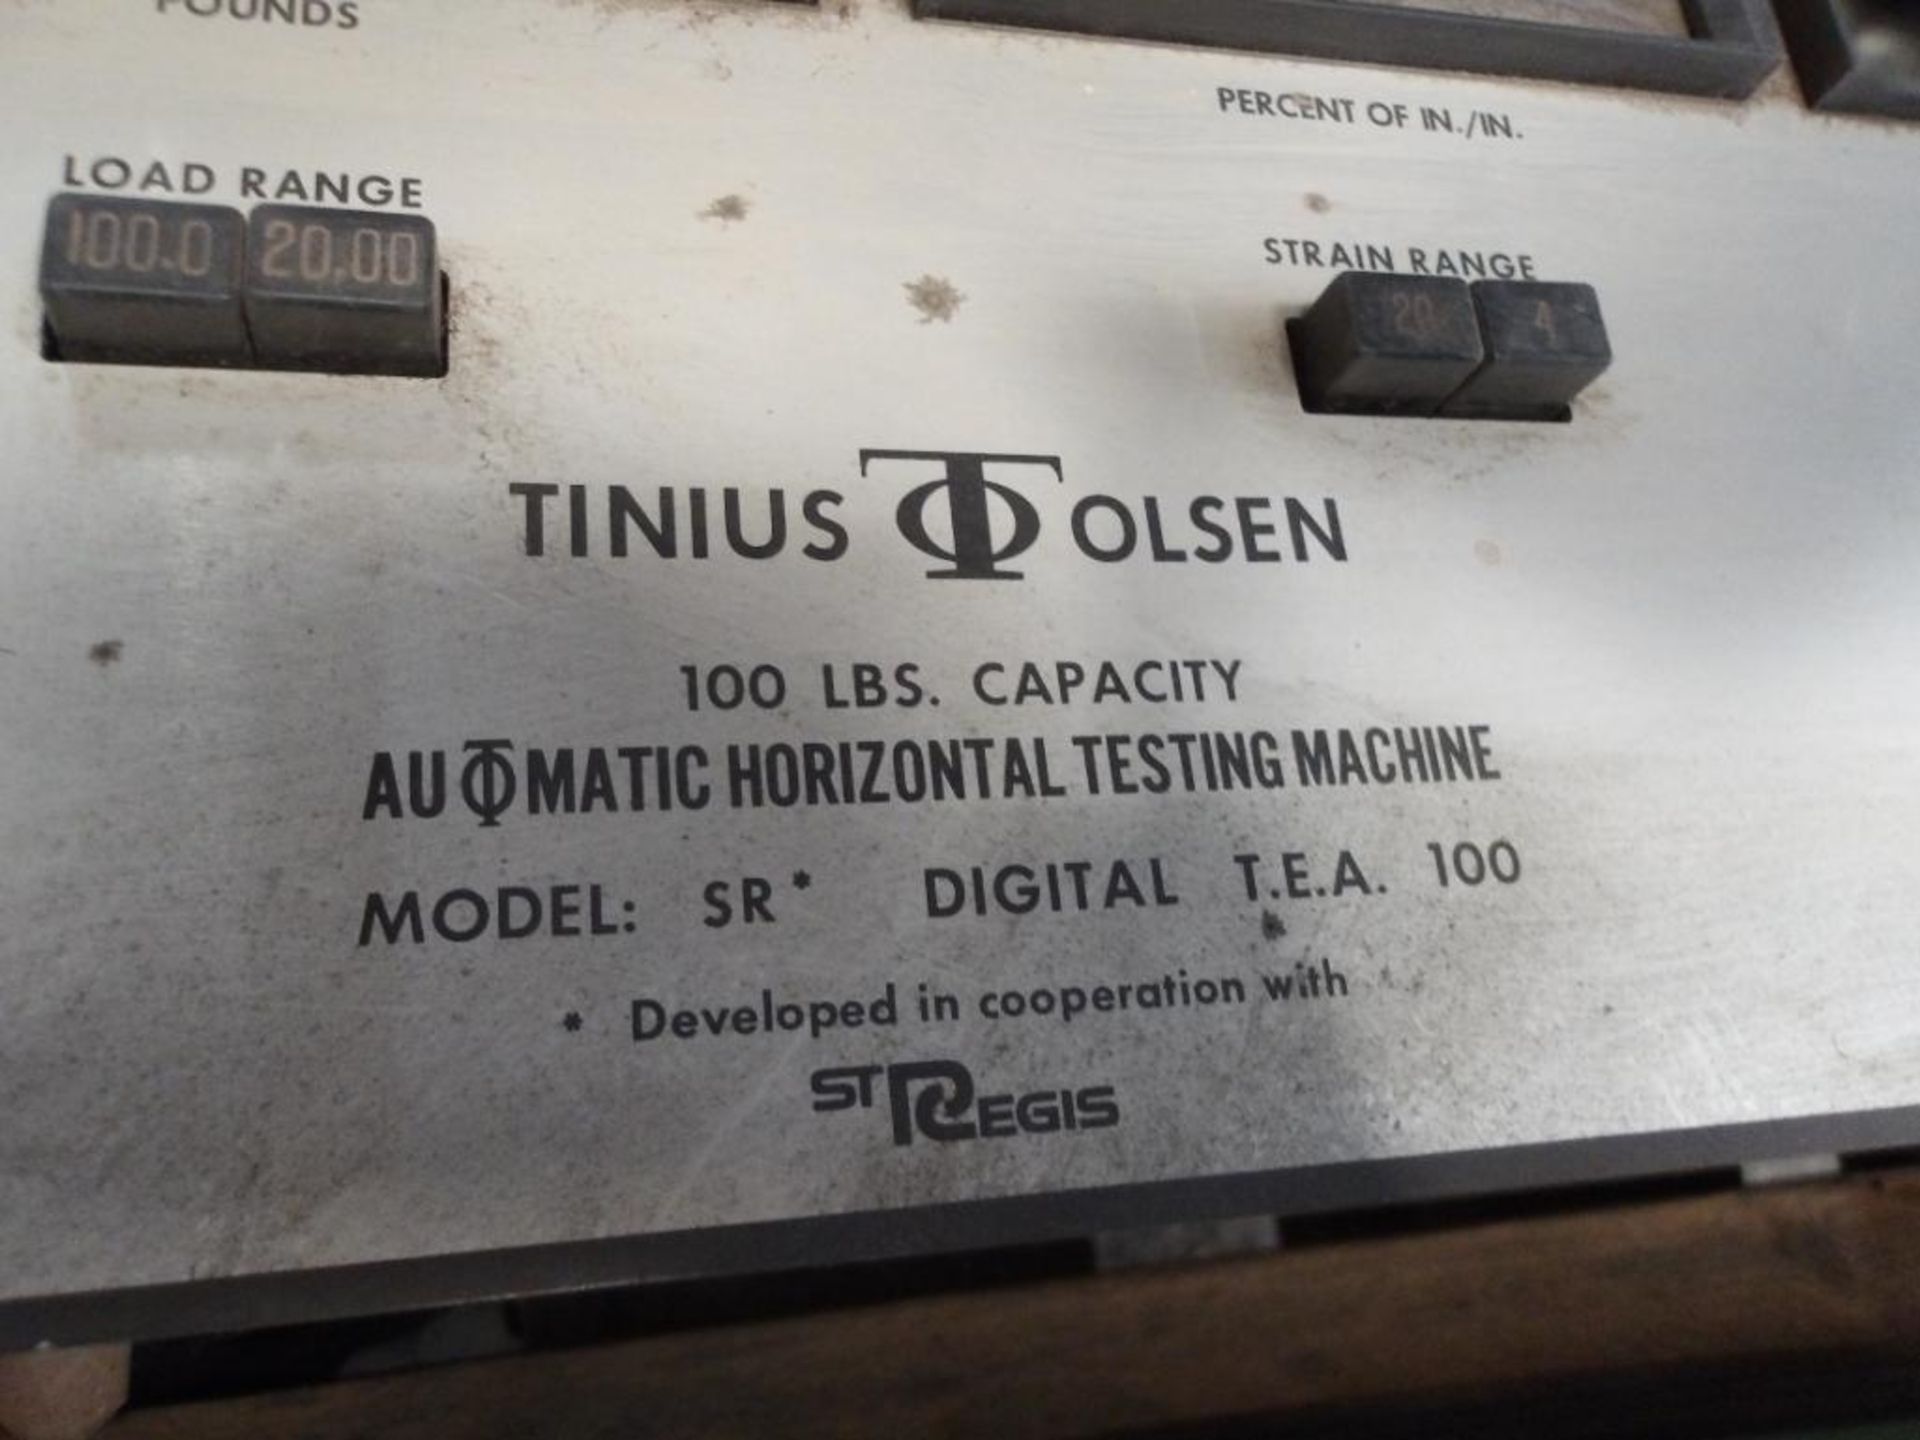 Tinius Olsen Auto Horizontal Testing Machine (Used) - Image 2 of 4